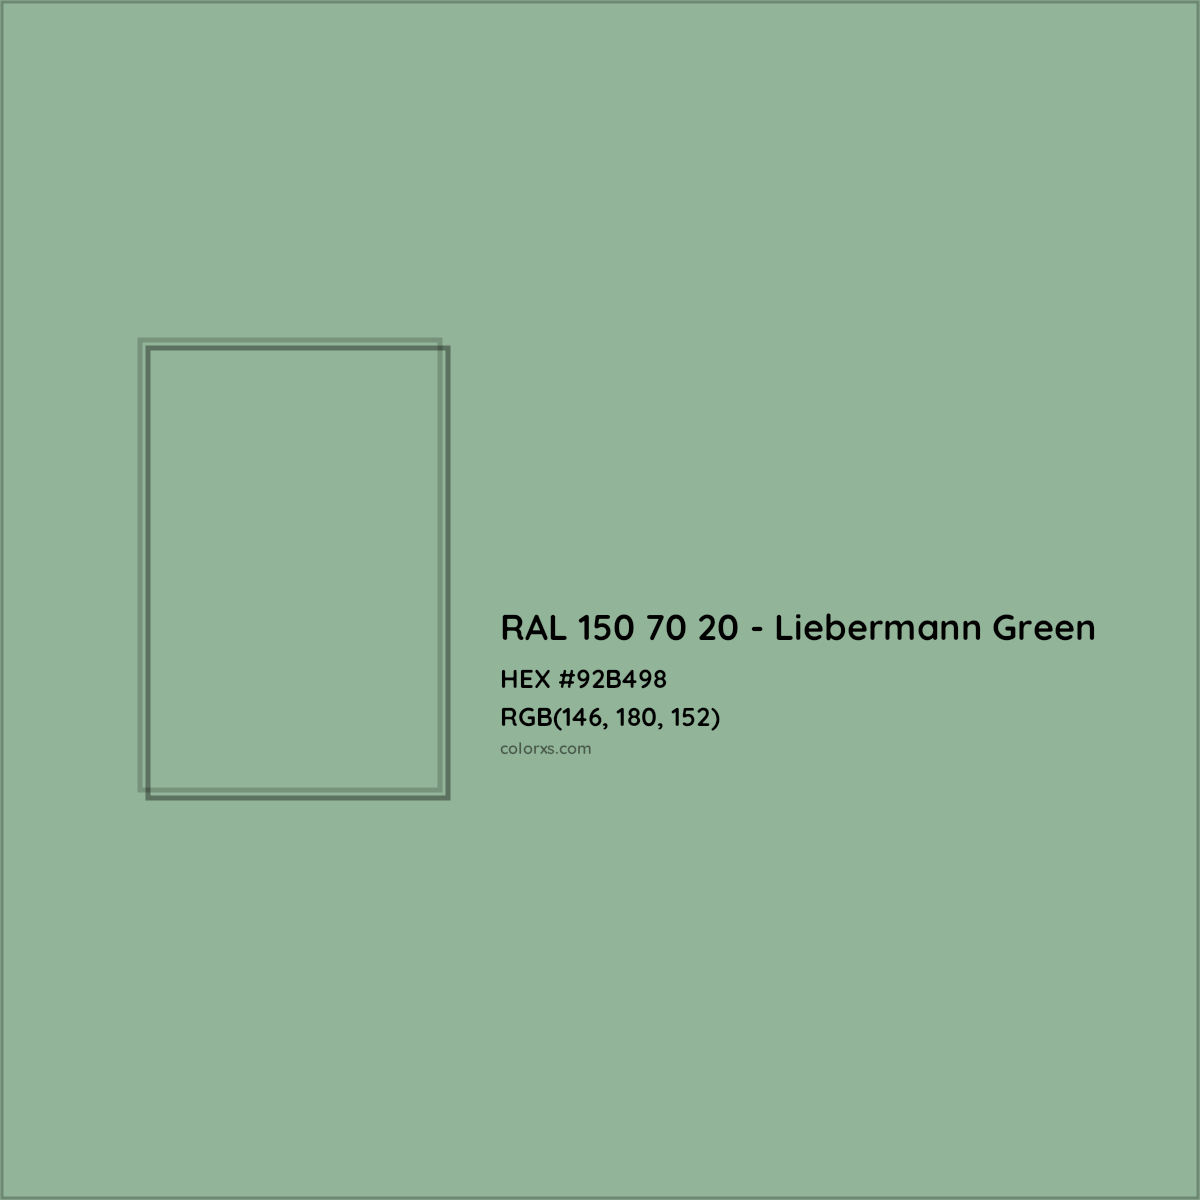 HEX #92B498 RAL 150 70 20 - Liebermann Green CMS RAL Design - Color Code